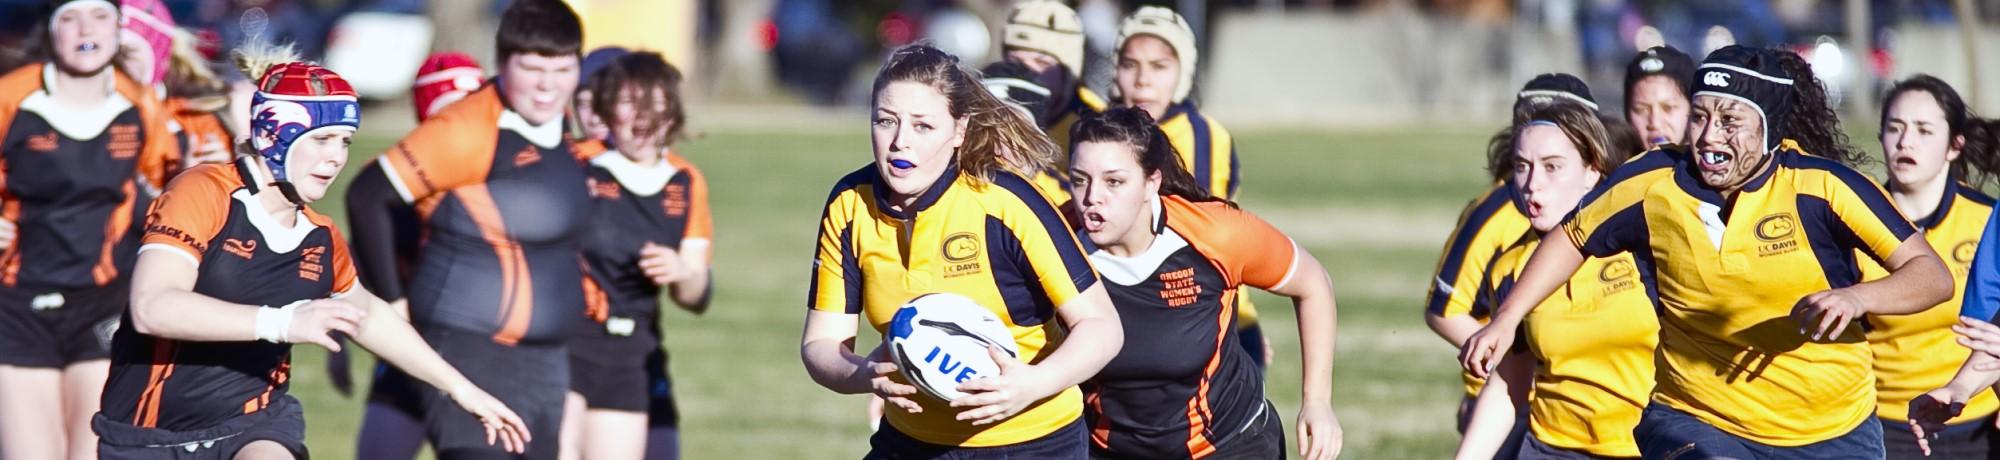 uc davis women's rugby sport clubs team